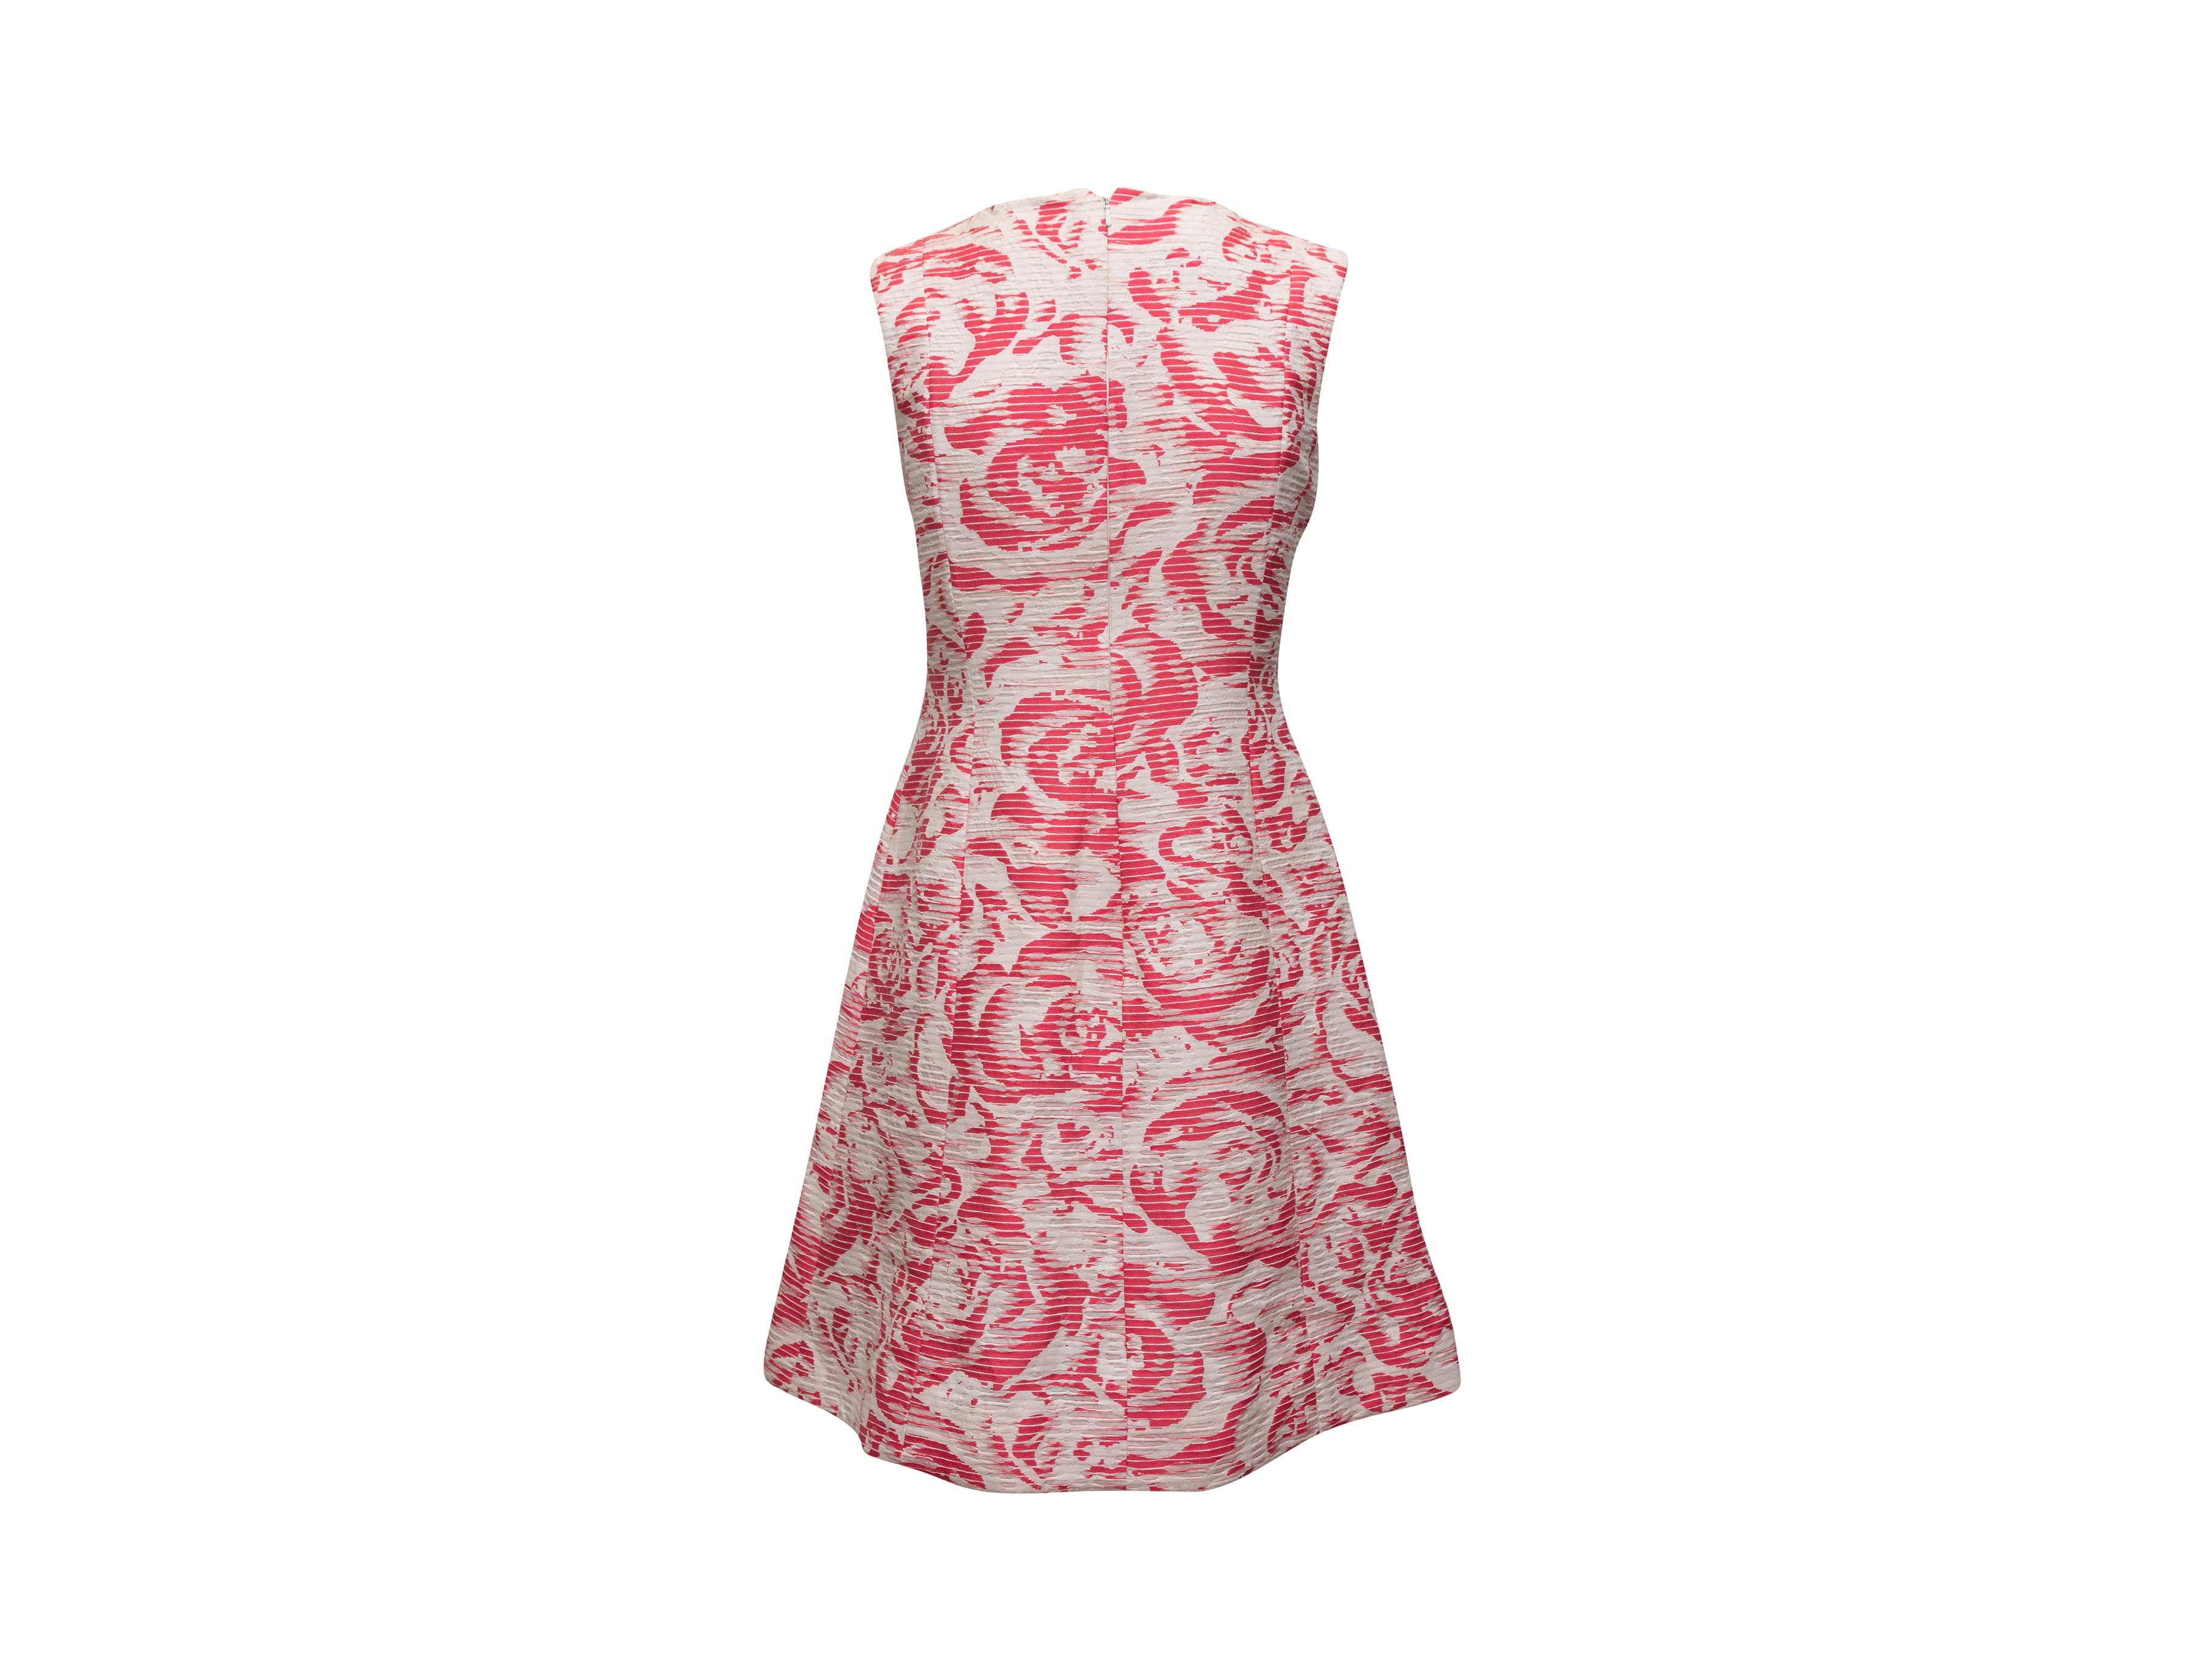 Brown Oscar de la Renta Pink & White Resort 2017 Sample Dress